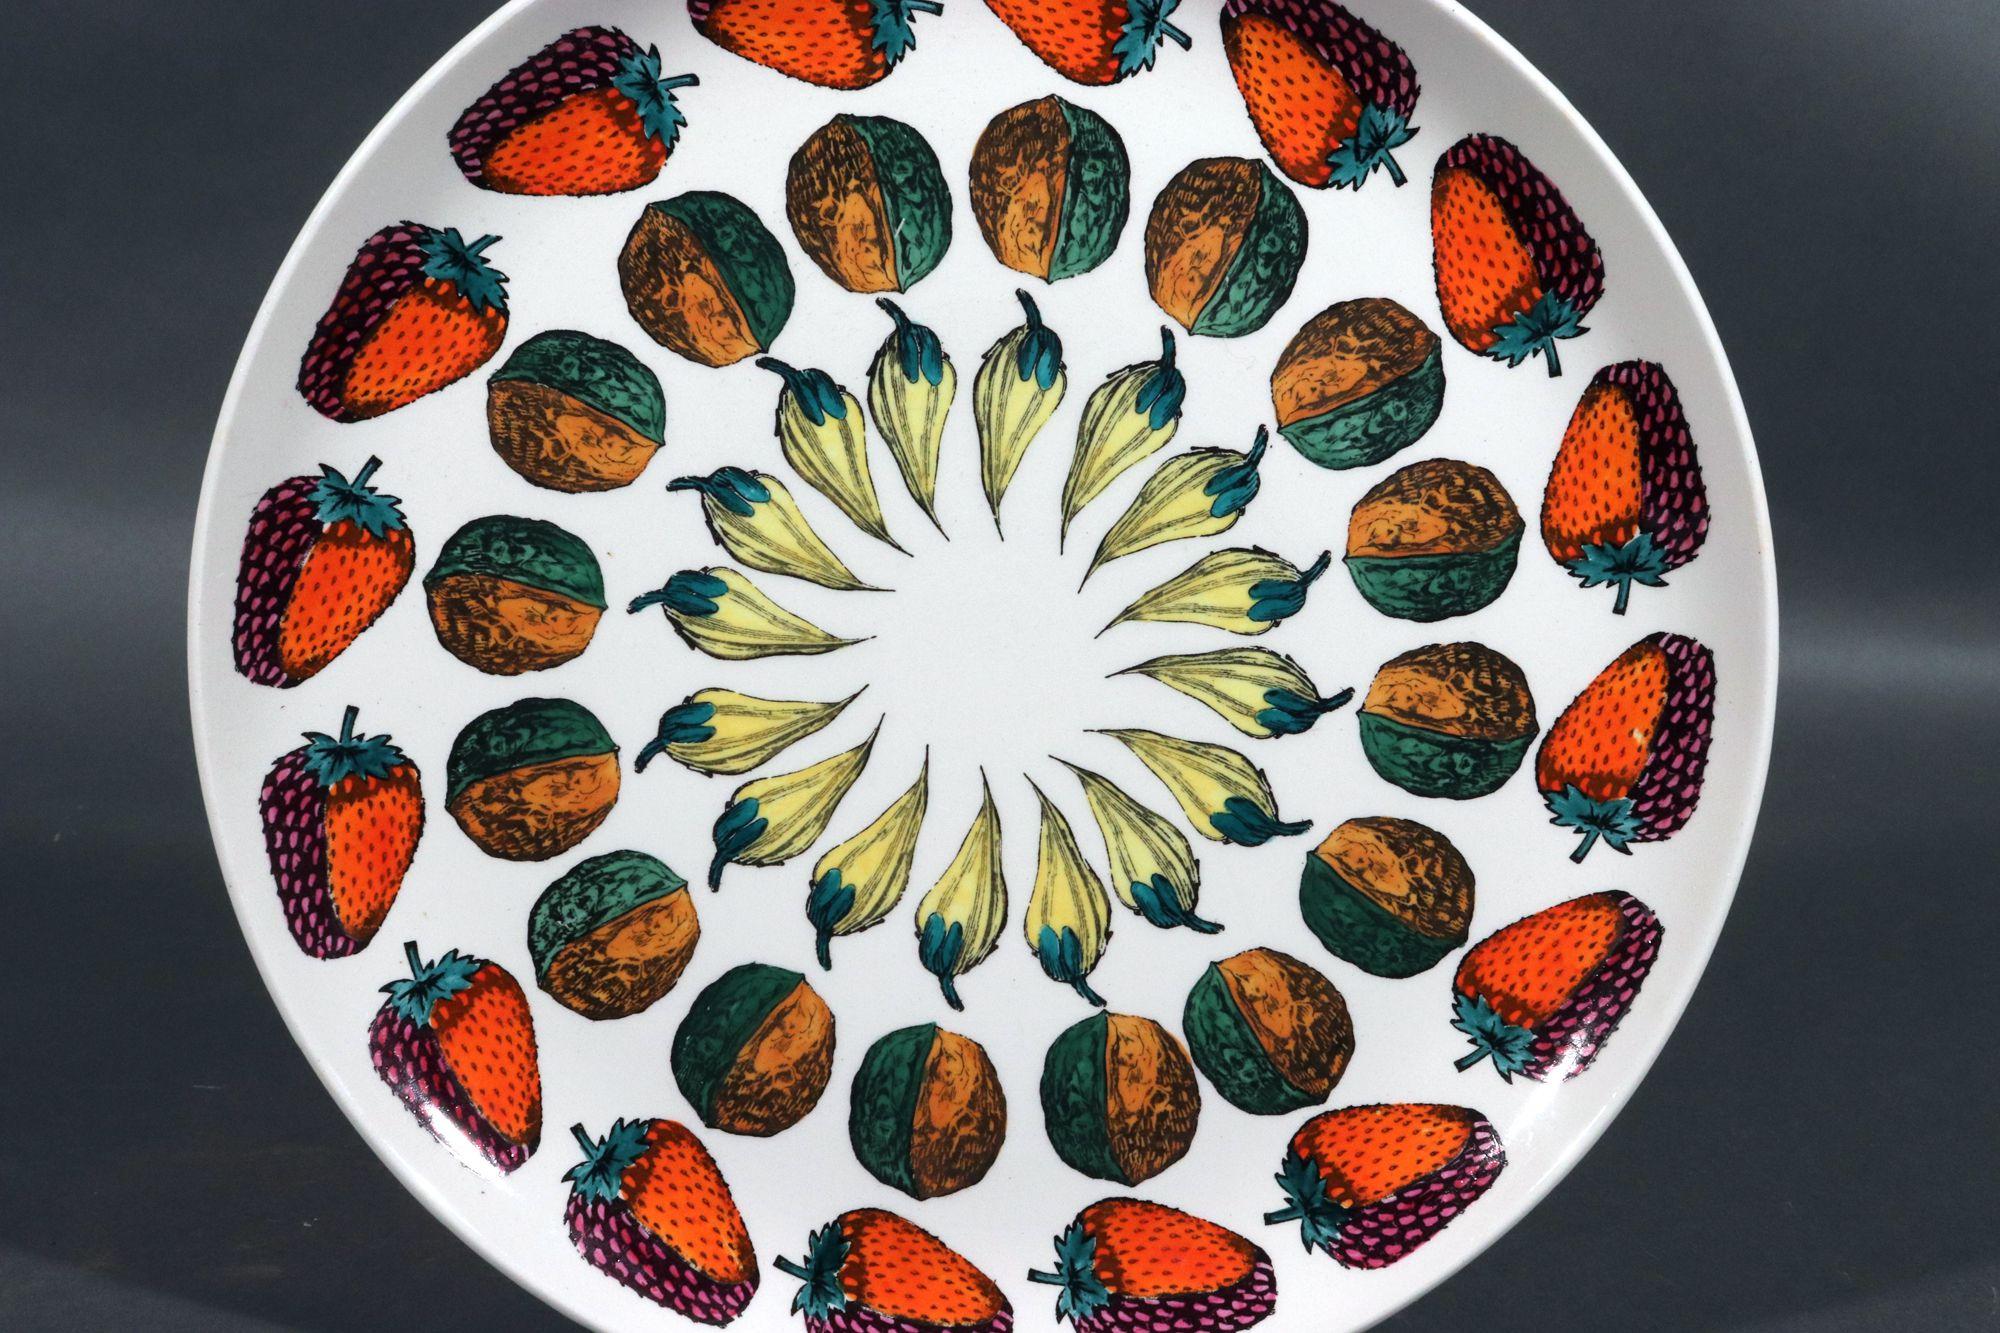 Piero Fornasetti Porcelain Plates, Giostra di Frutta (Merry-go-Round of Fruit) For Sale 5